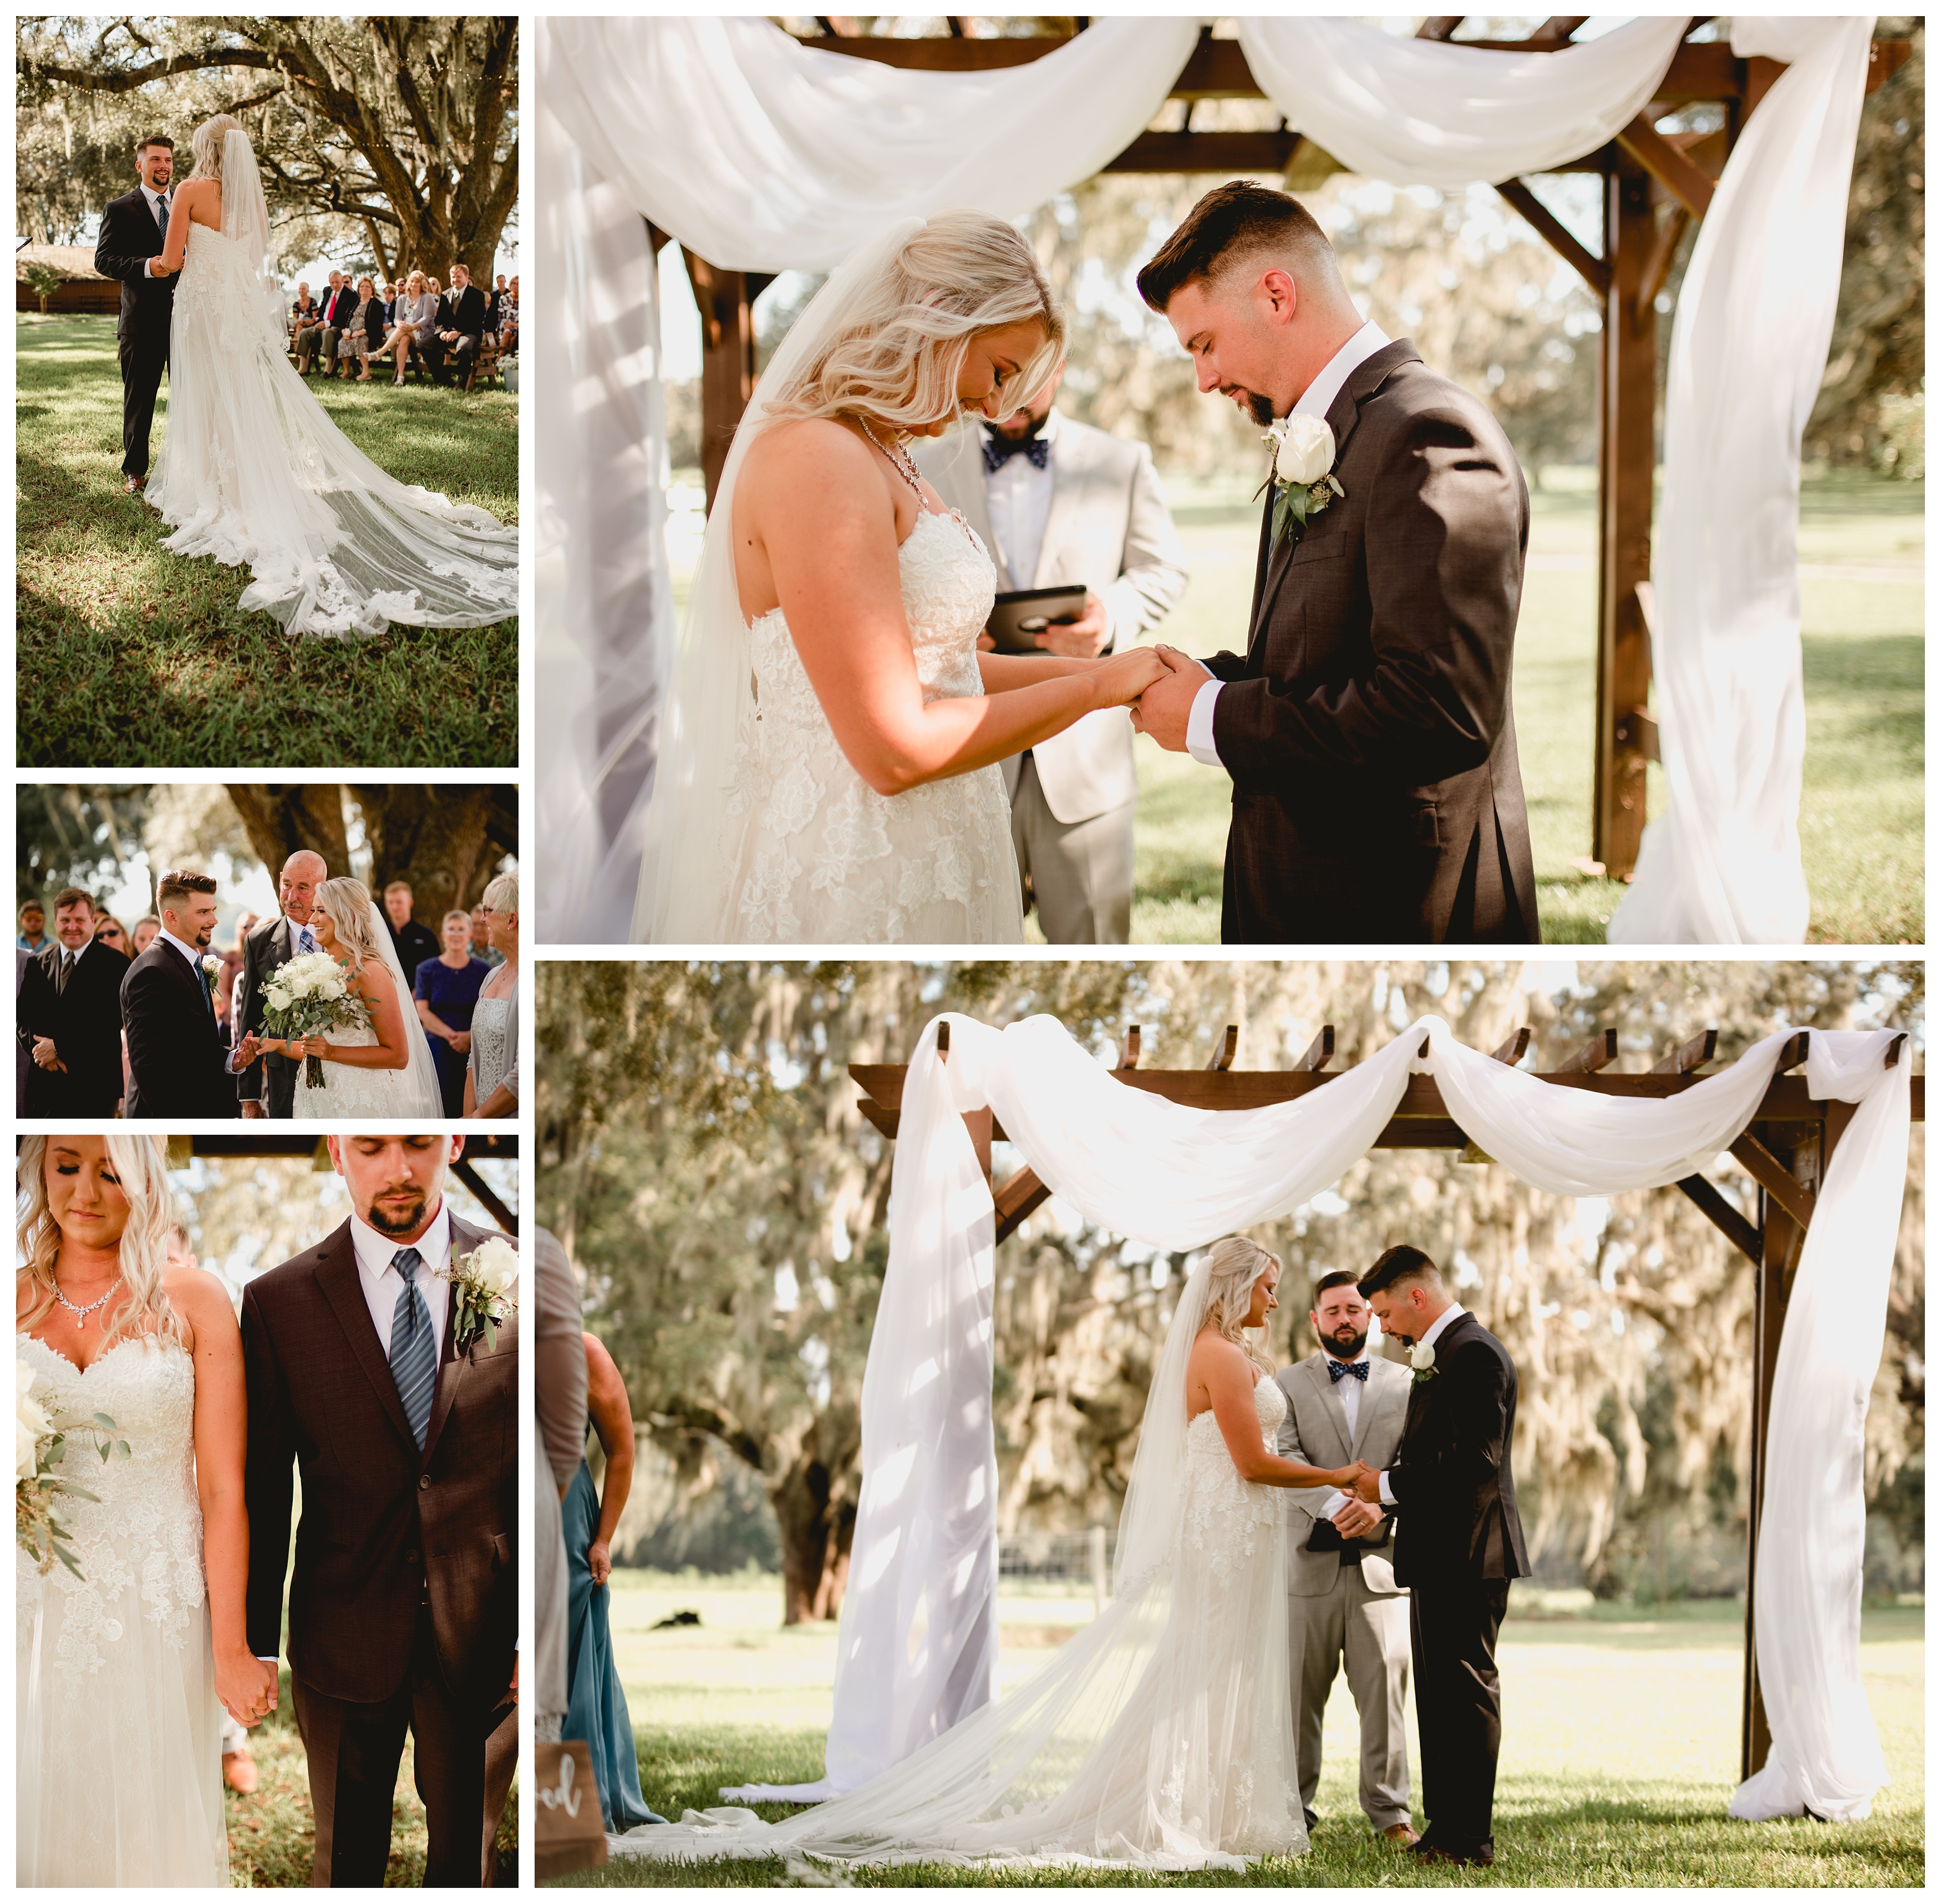 Wedding ceremony professional photos by Shelly Williams Photography. North Florida wedding photographer